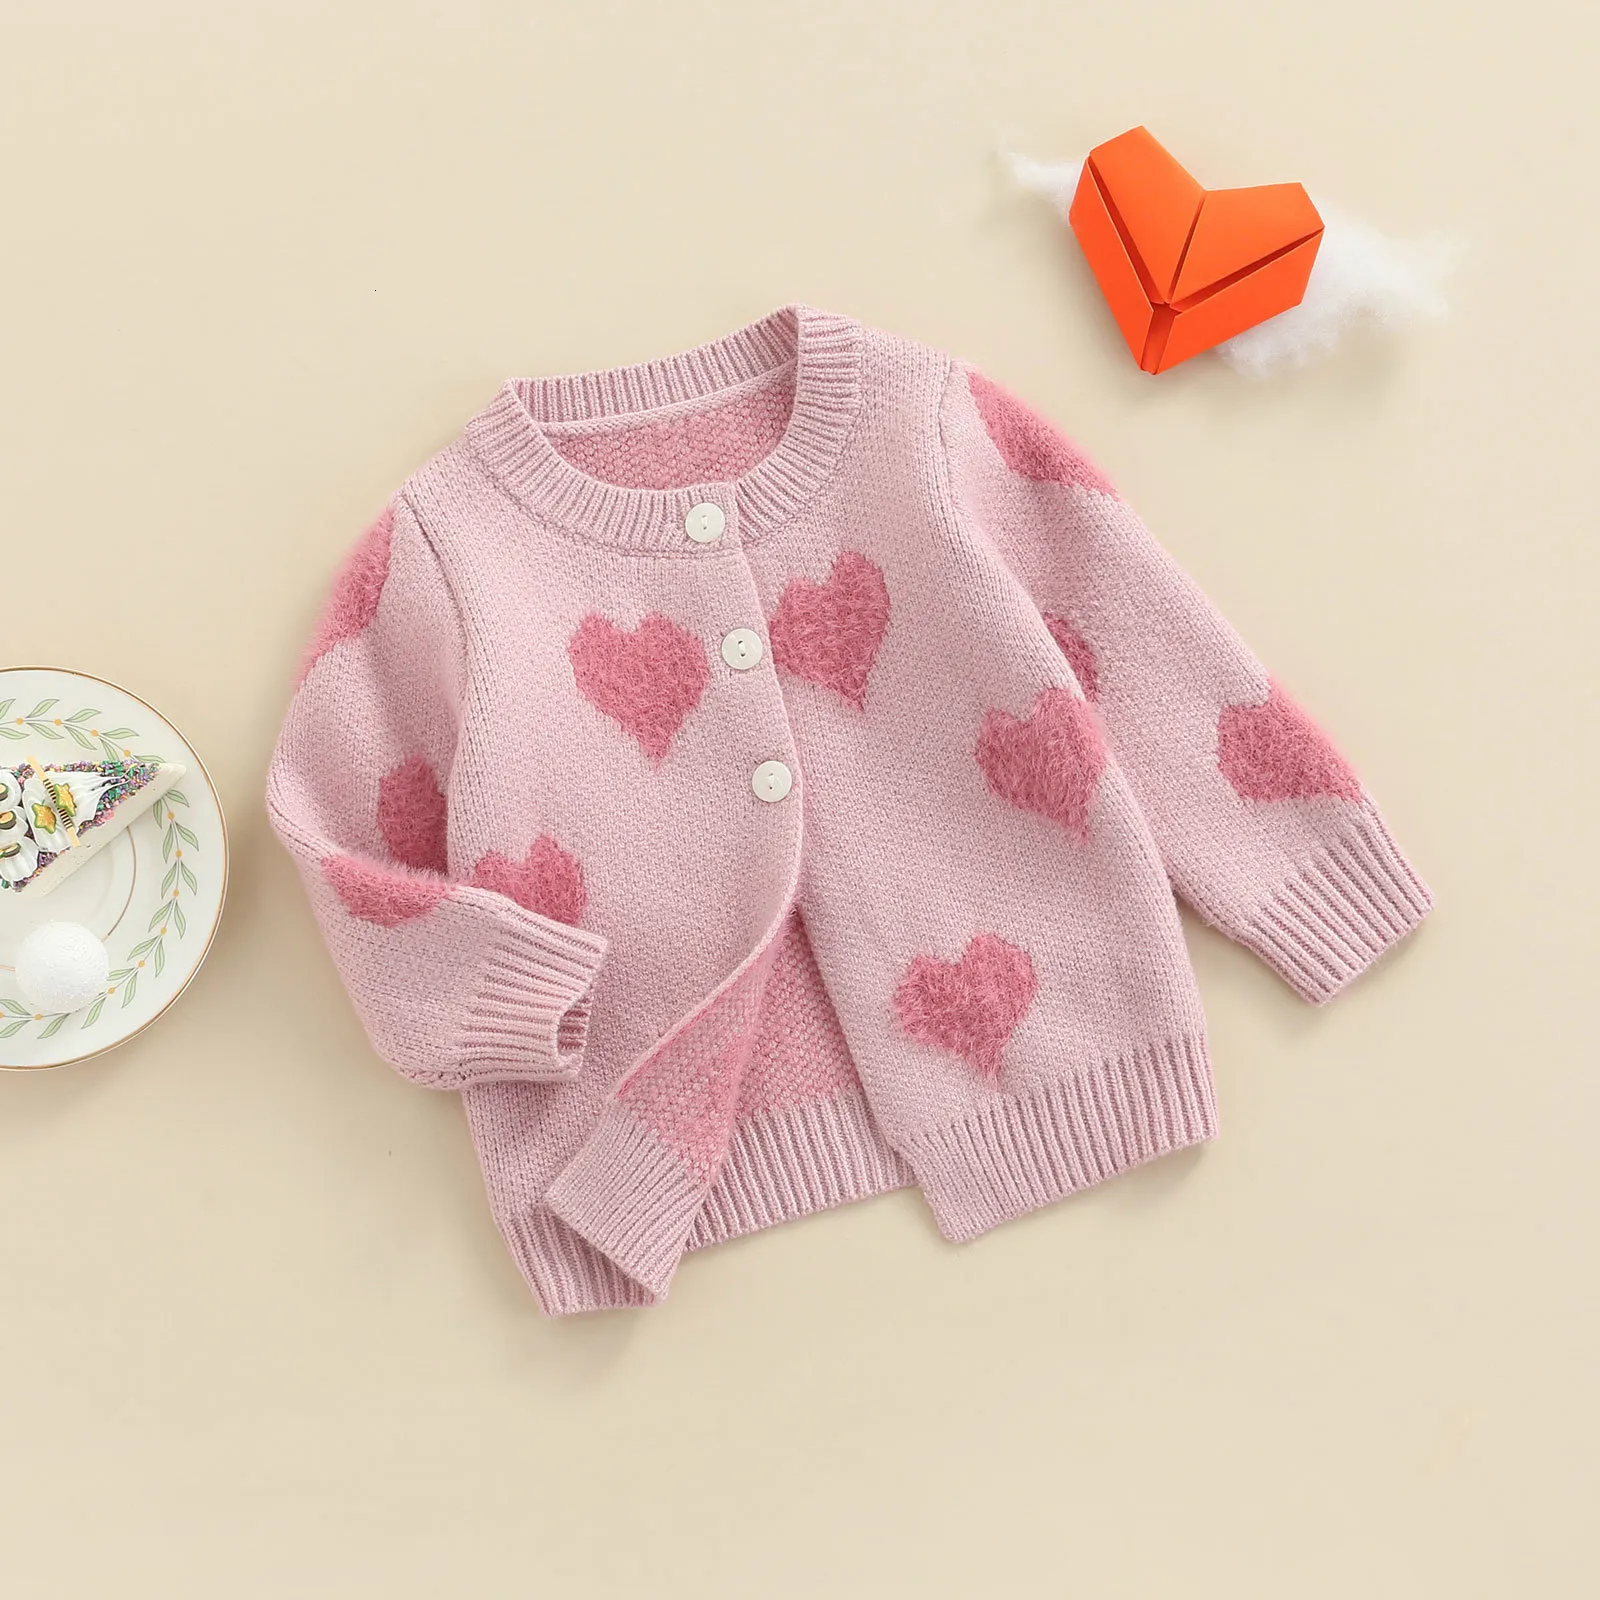 Coat Citgeett Autumn Toddler Infant Baby Girls Boys Cardigan Jackets Heart Print Long Sleeve Button Closure Knitted Sweater Tops 230620